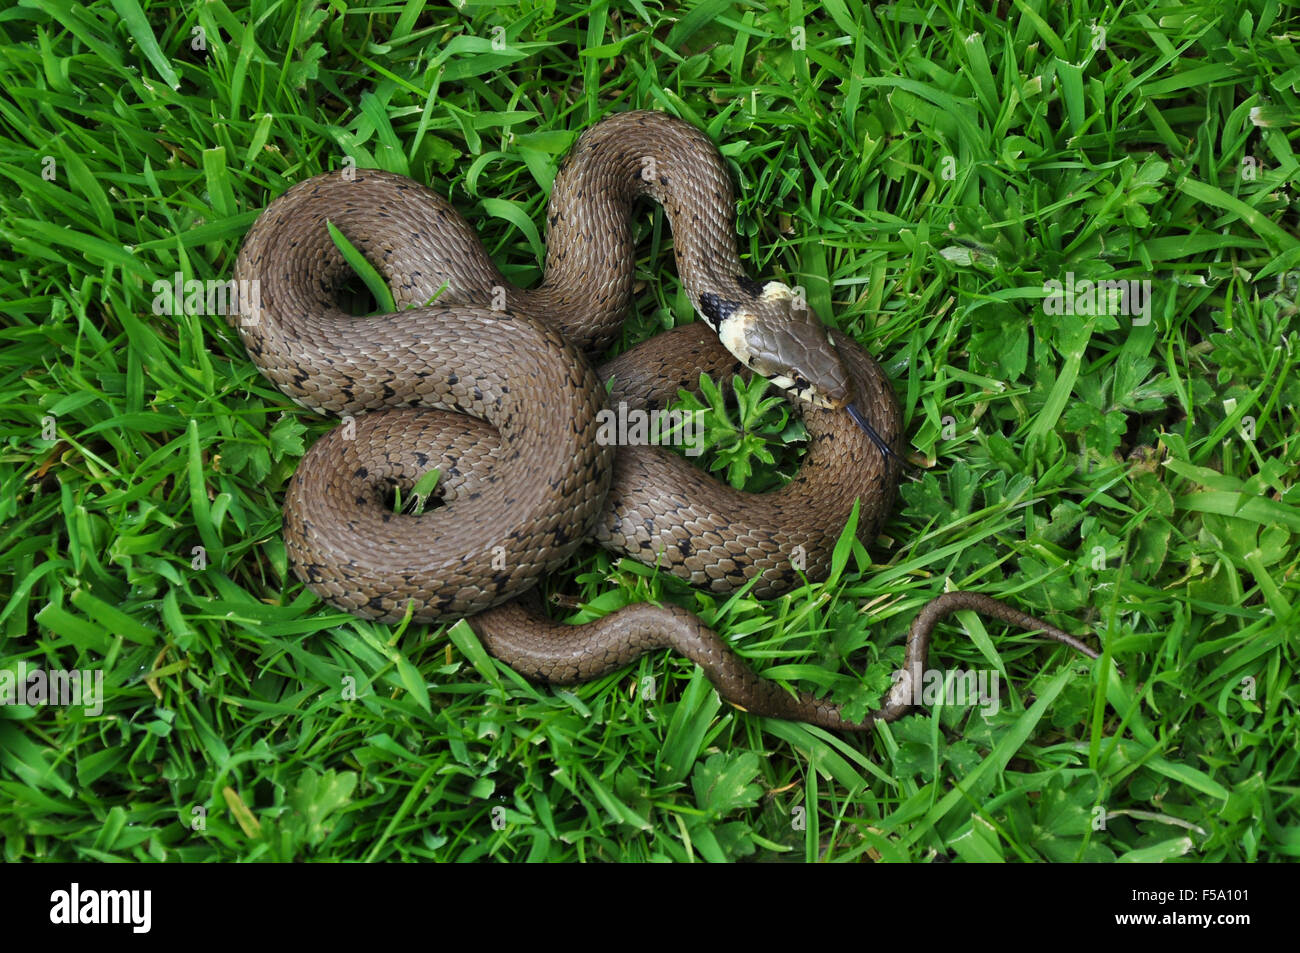 Grass snake on grass UK Stock Photo